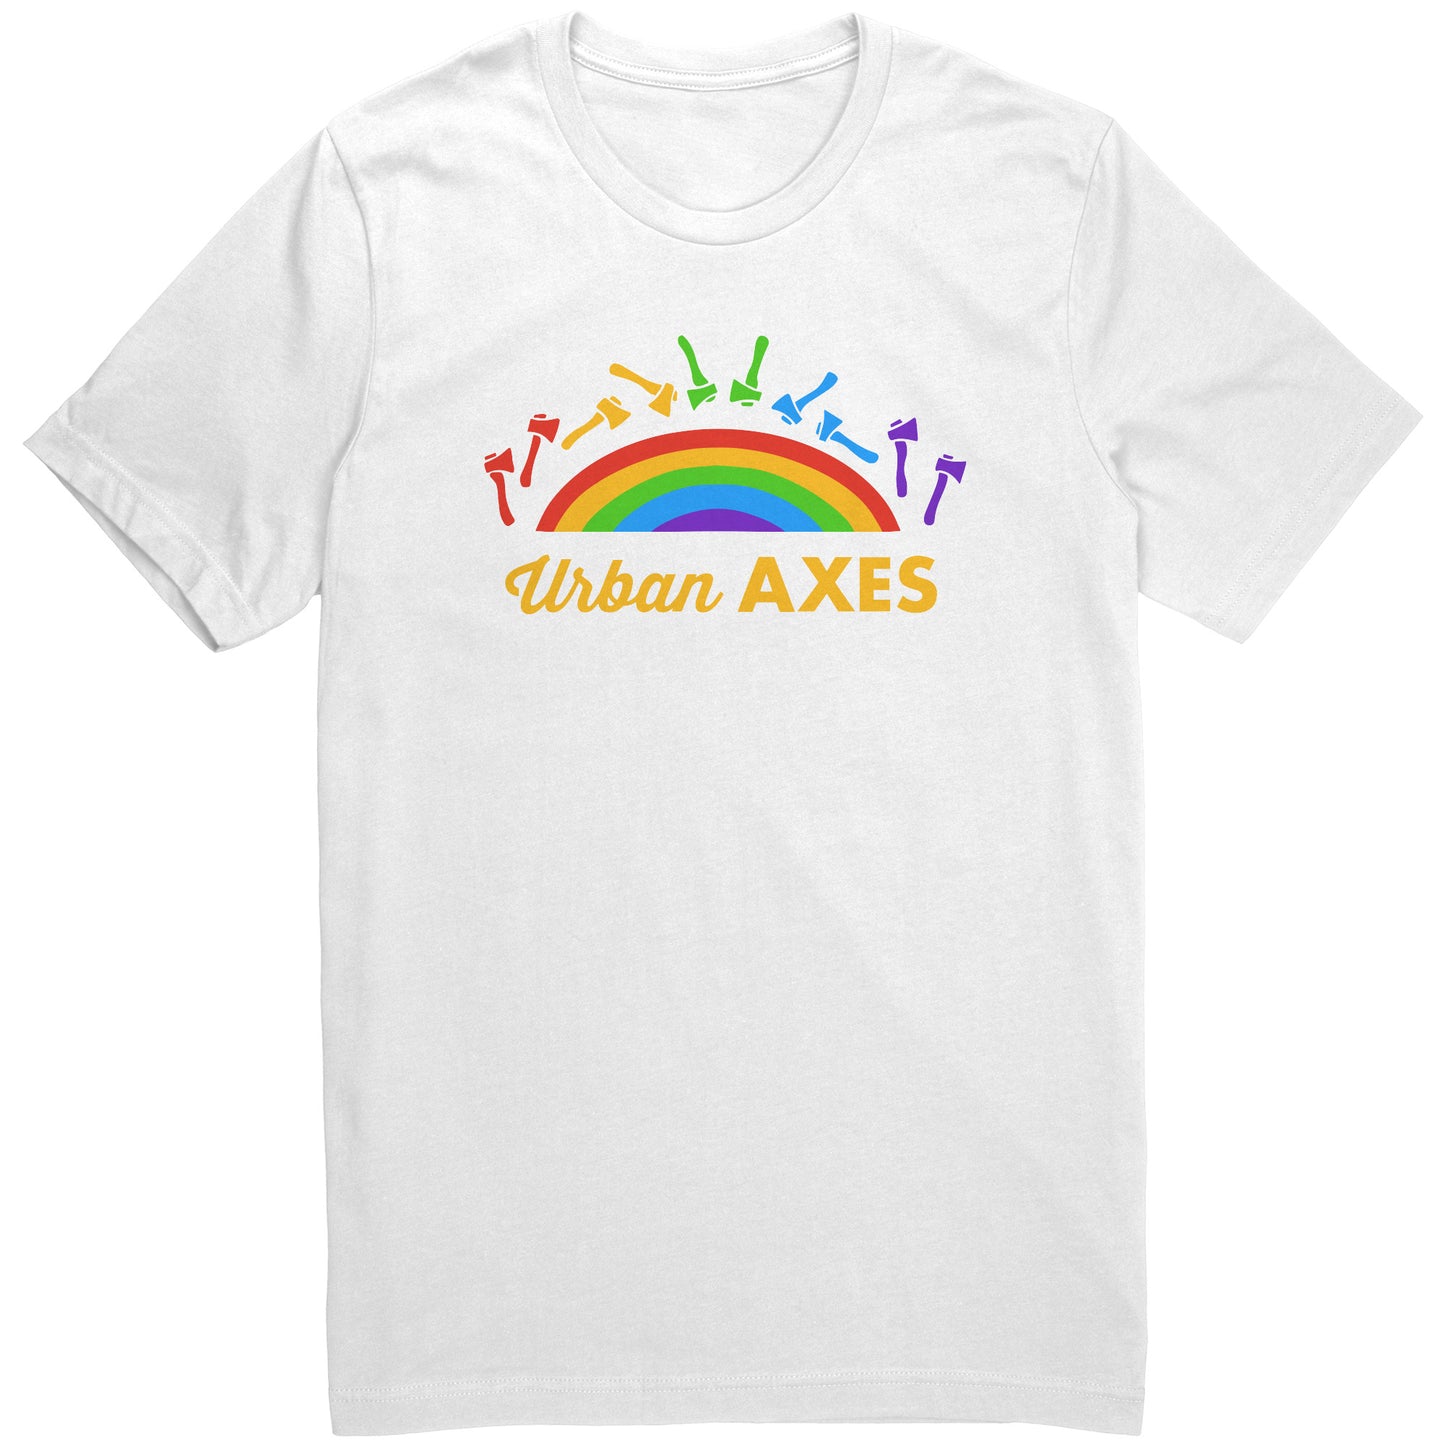 Urban Axes Rainbow Pride Shirt - Canvas Unisex